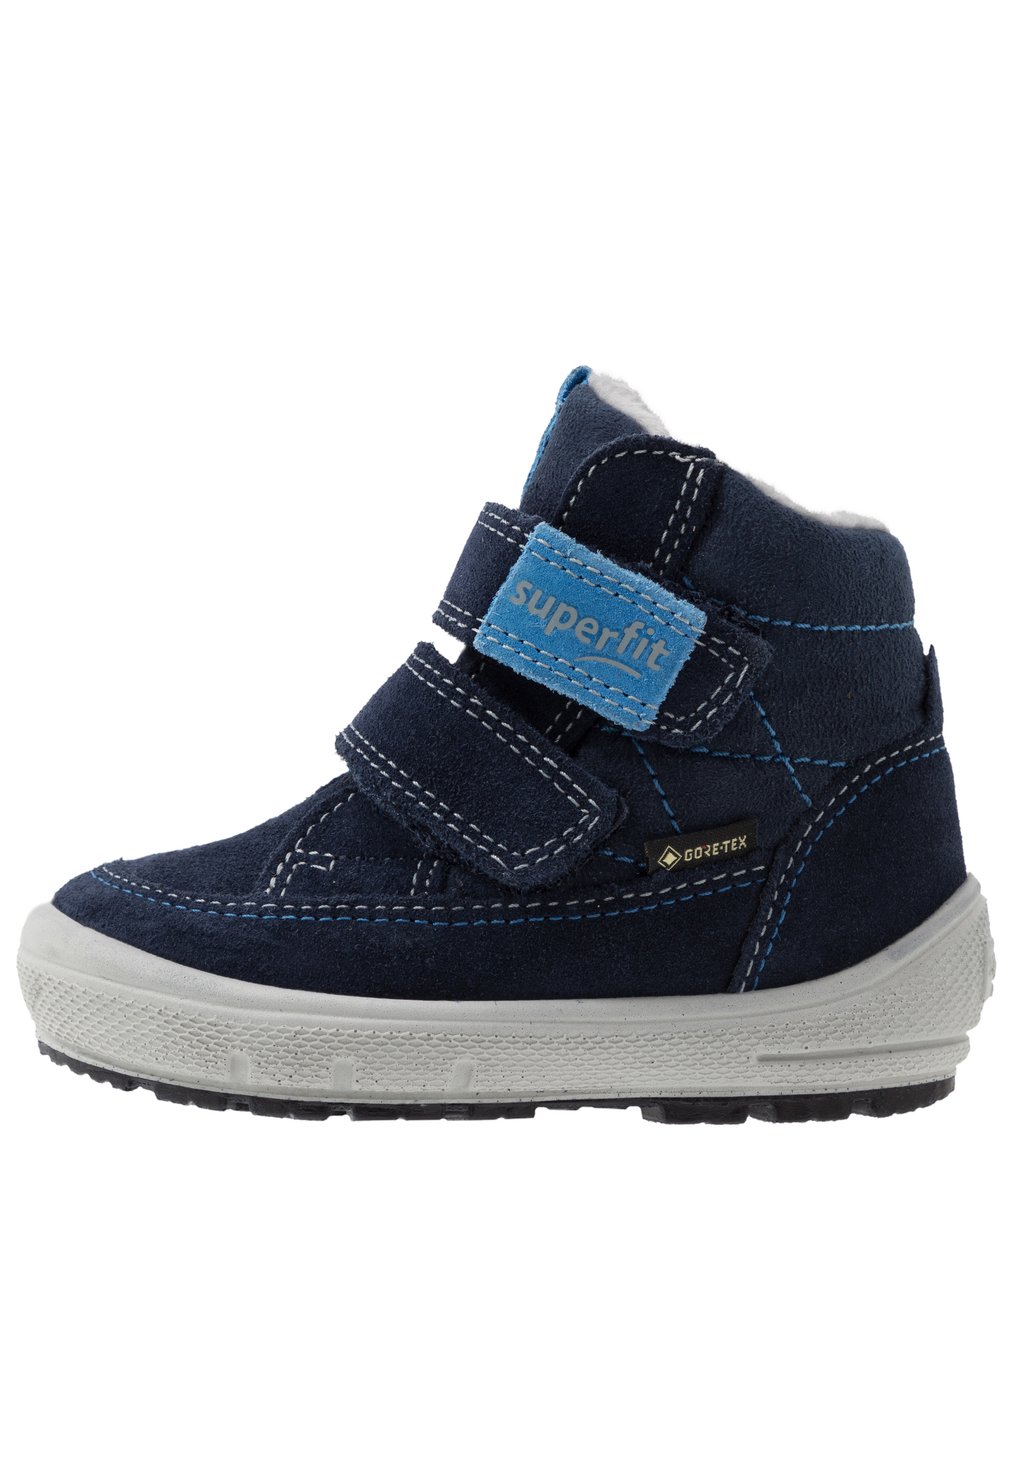 Зимние ботинки/зимние ботинки GROOVY Superfit, цвет blau